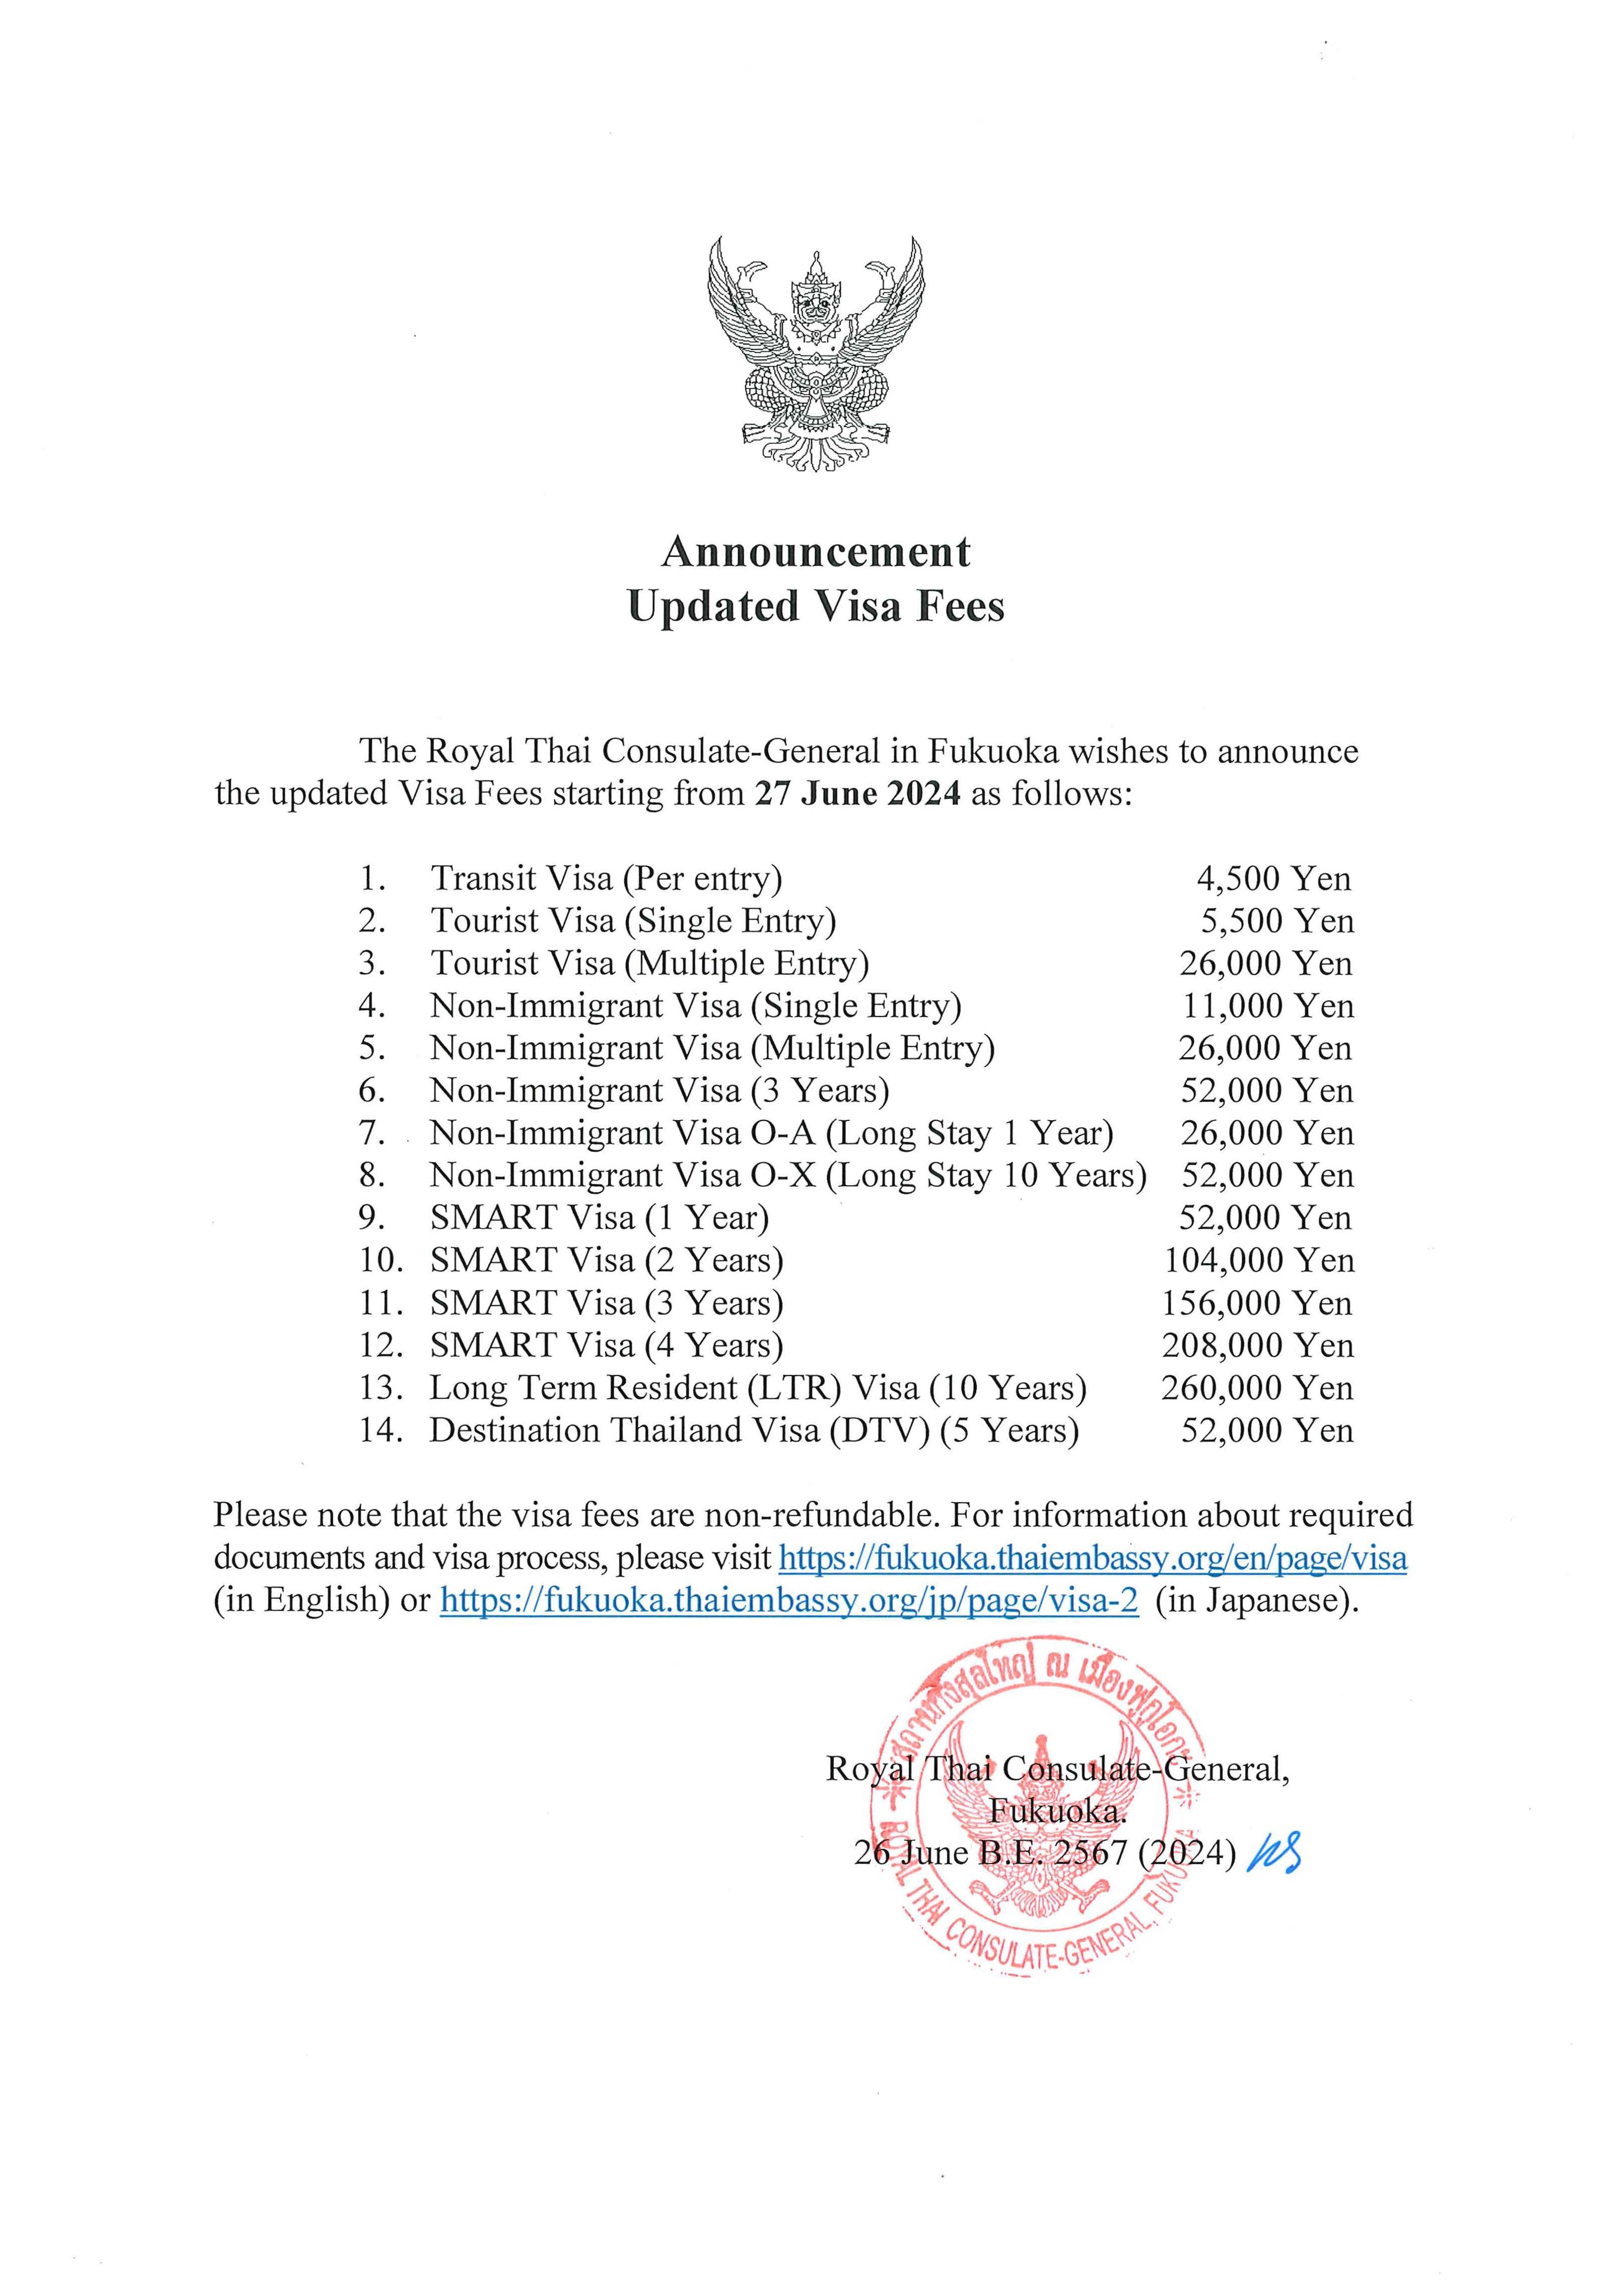 Annoucement_Updated_Visa_Fees_Jun_2024_1